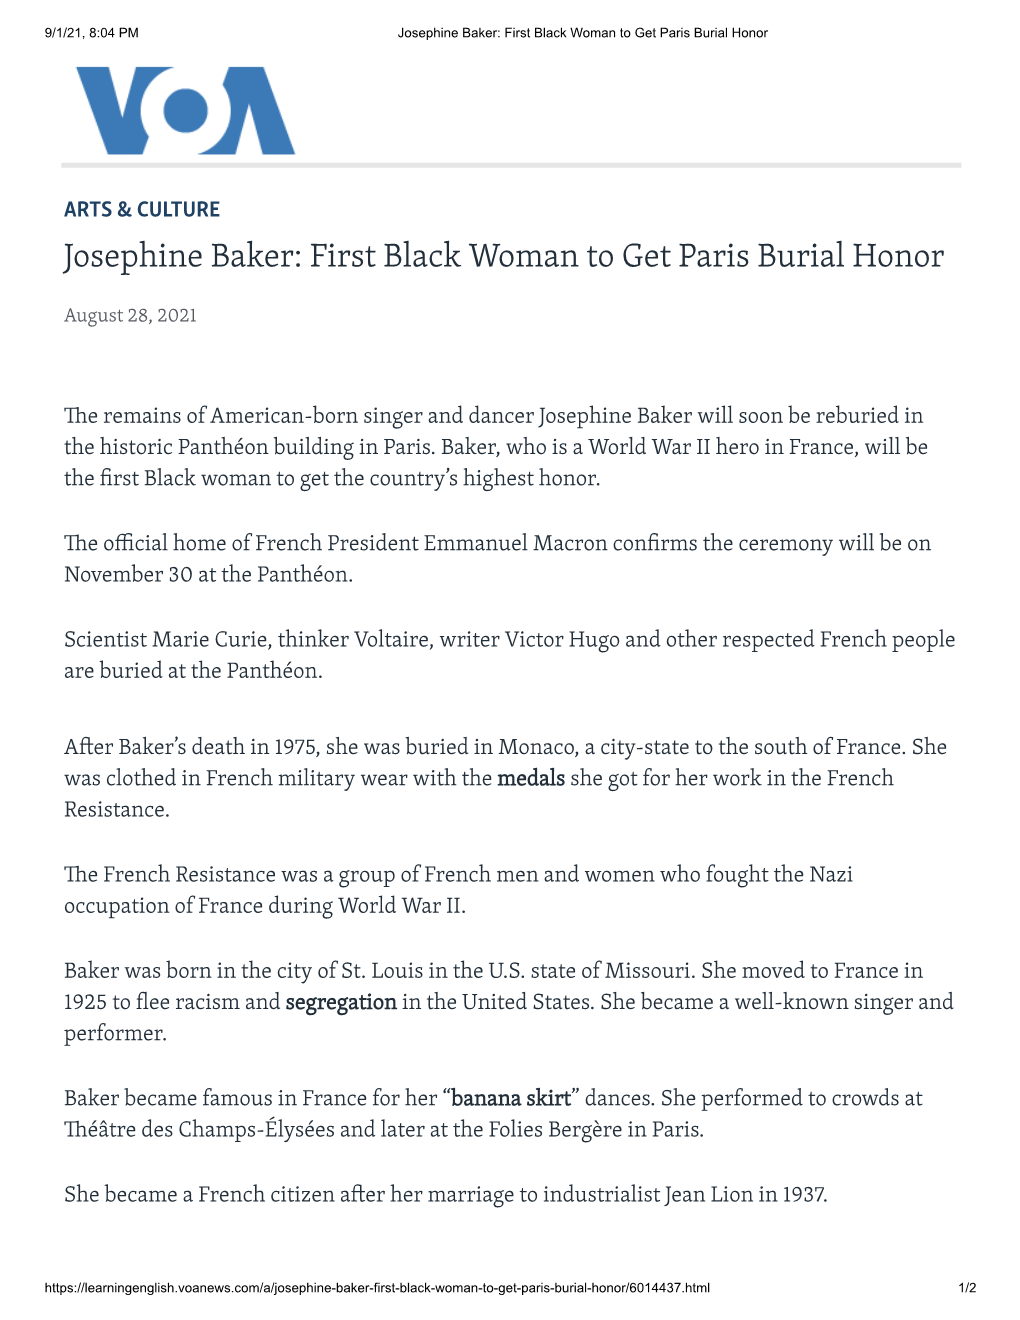 Josephine Baker: First Black Woman to Get Paris Burial Honor